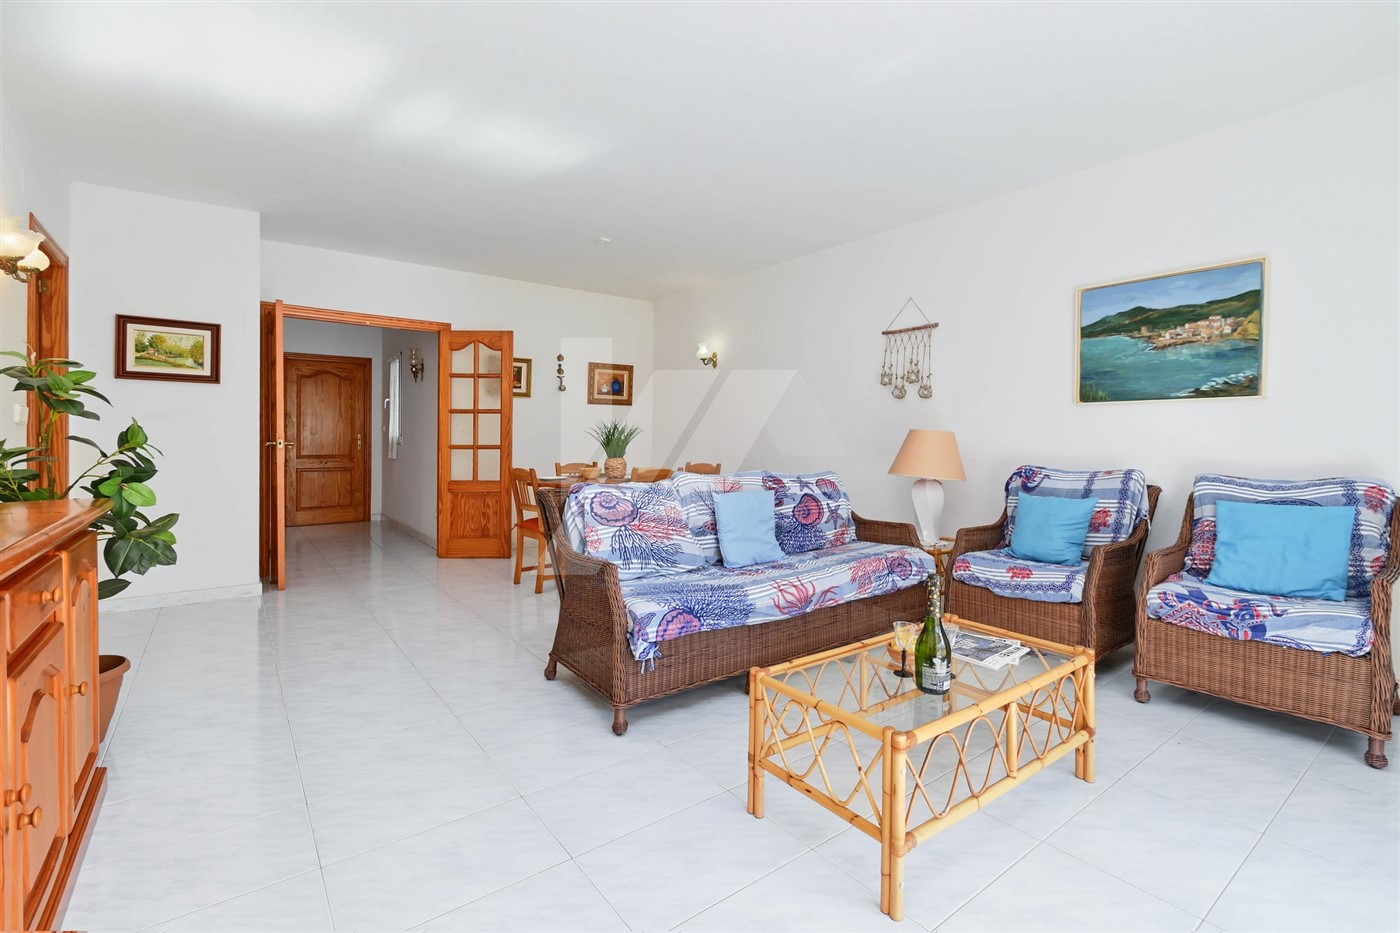 Apartment for sale in the centre of Moraira, Costa Blanca.